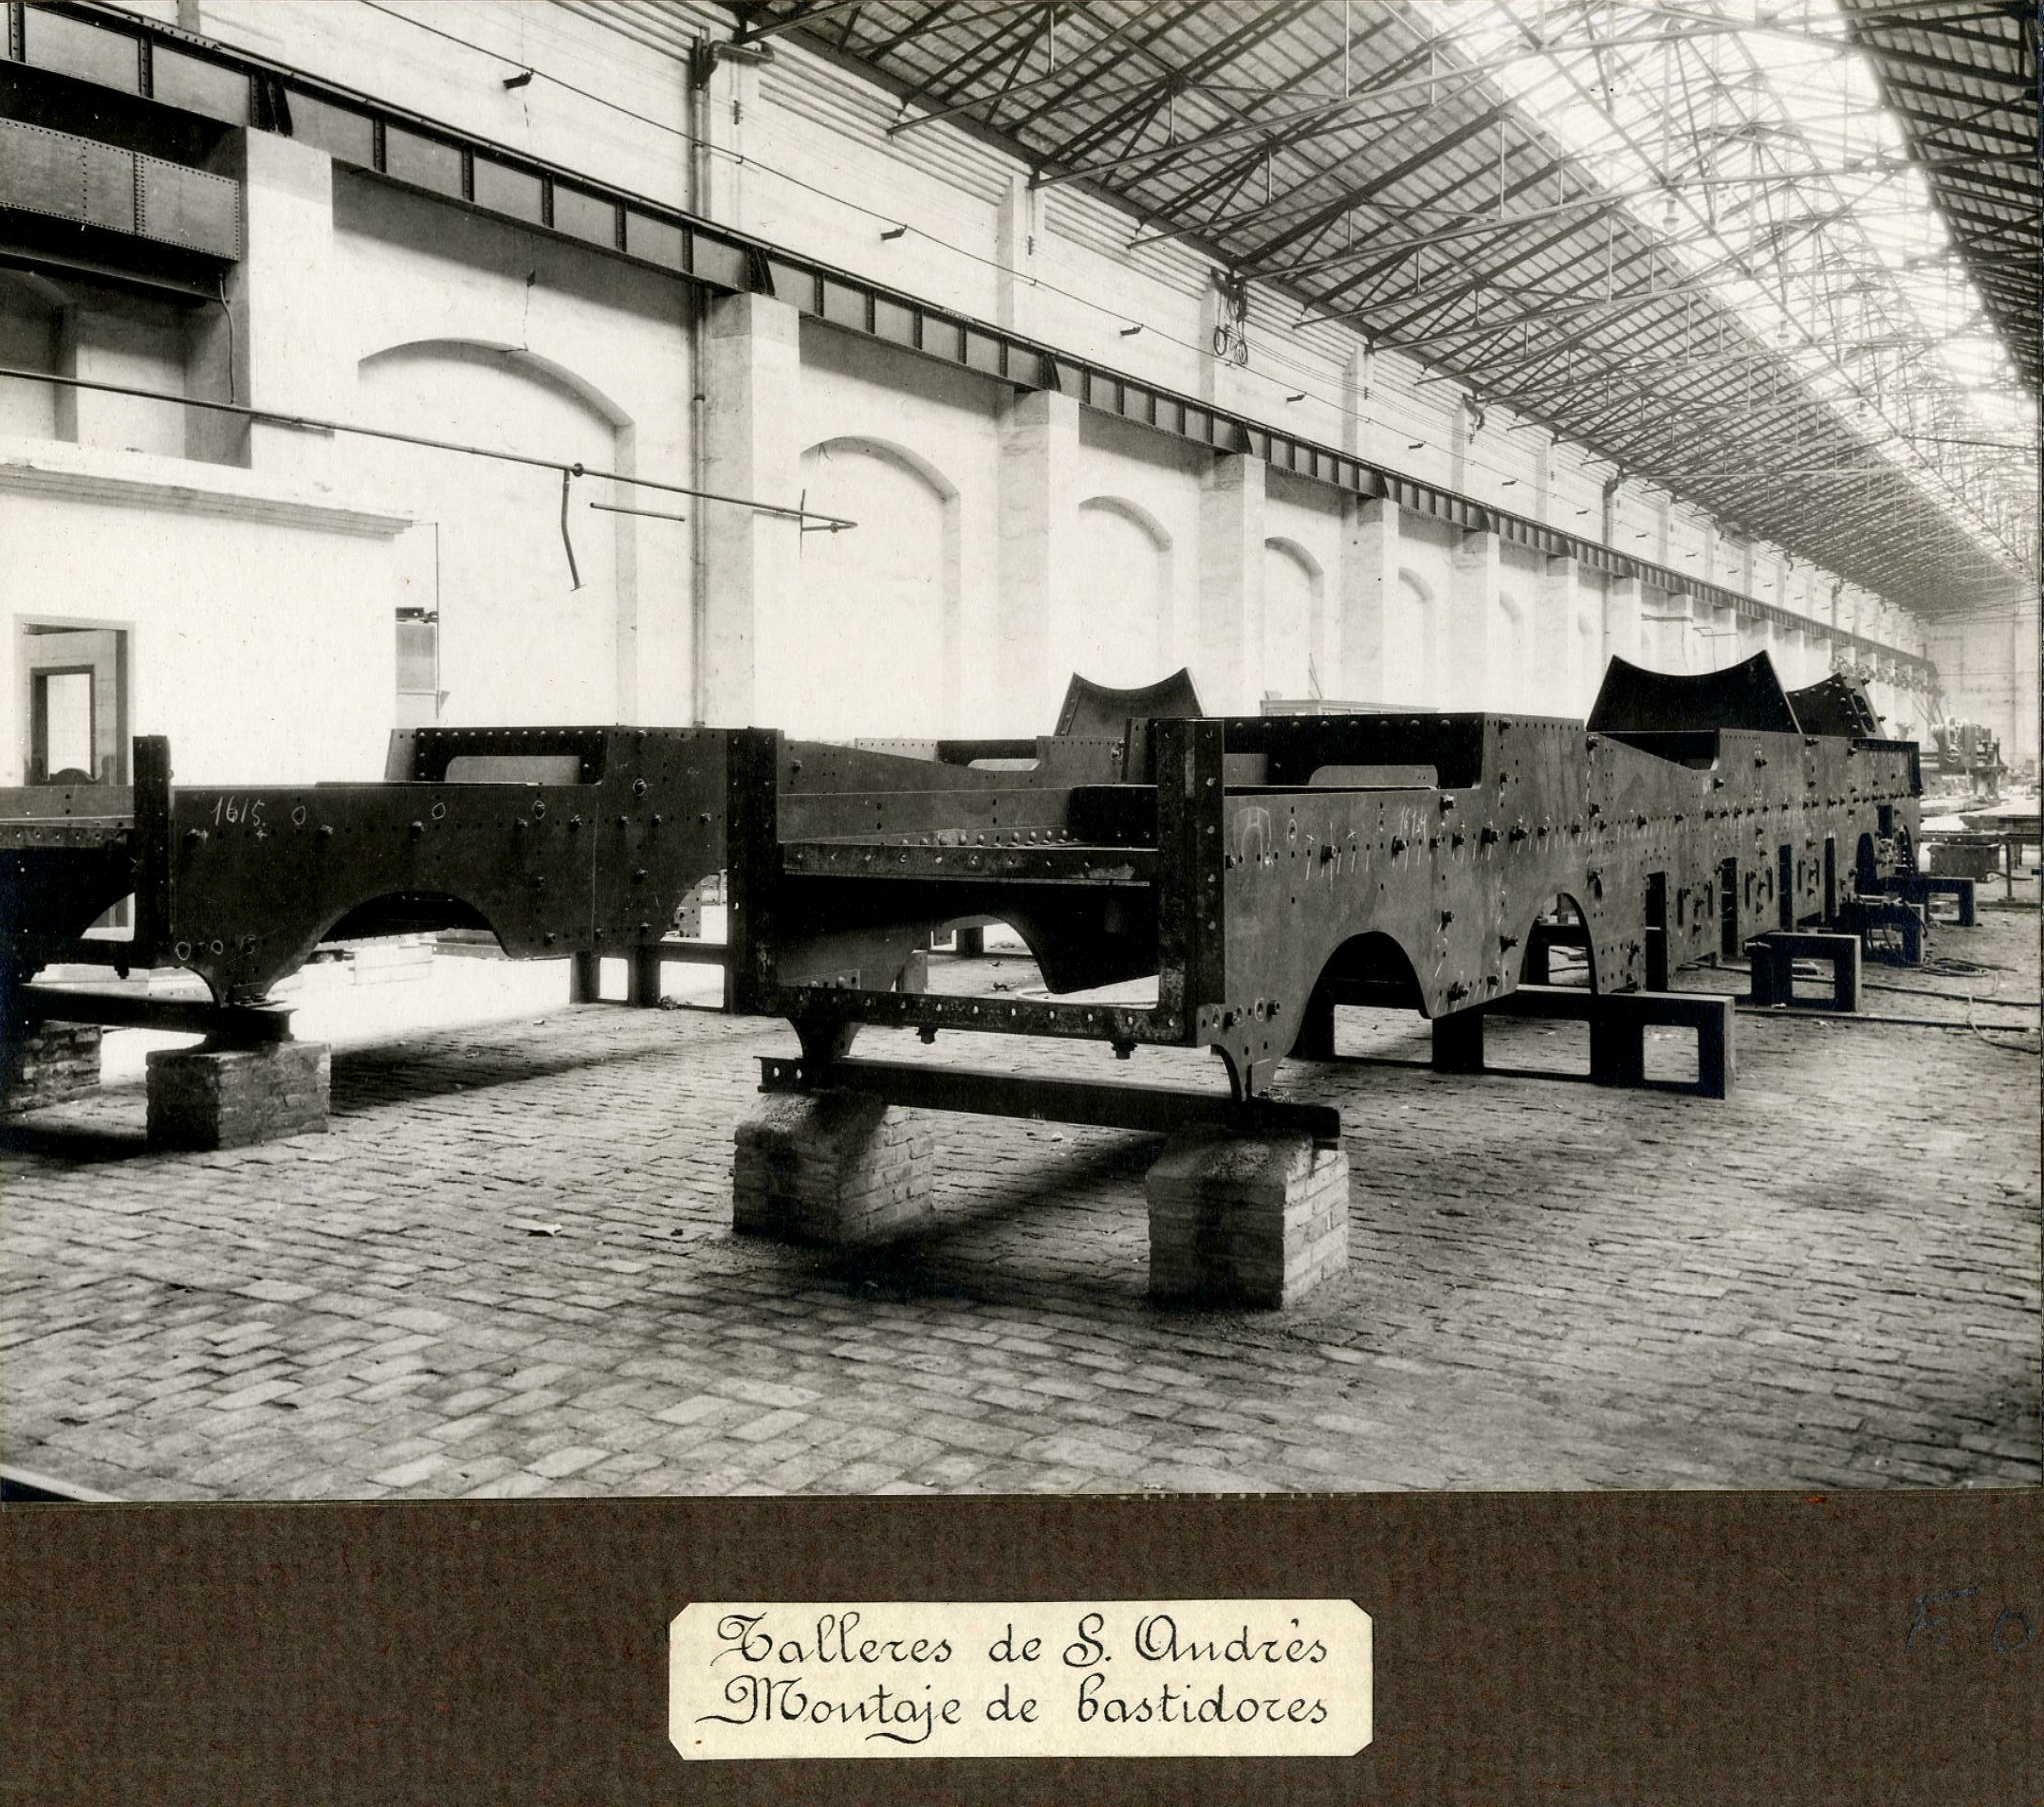 Talleres de San Andrés. Montaje de bastidores. 1900